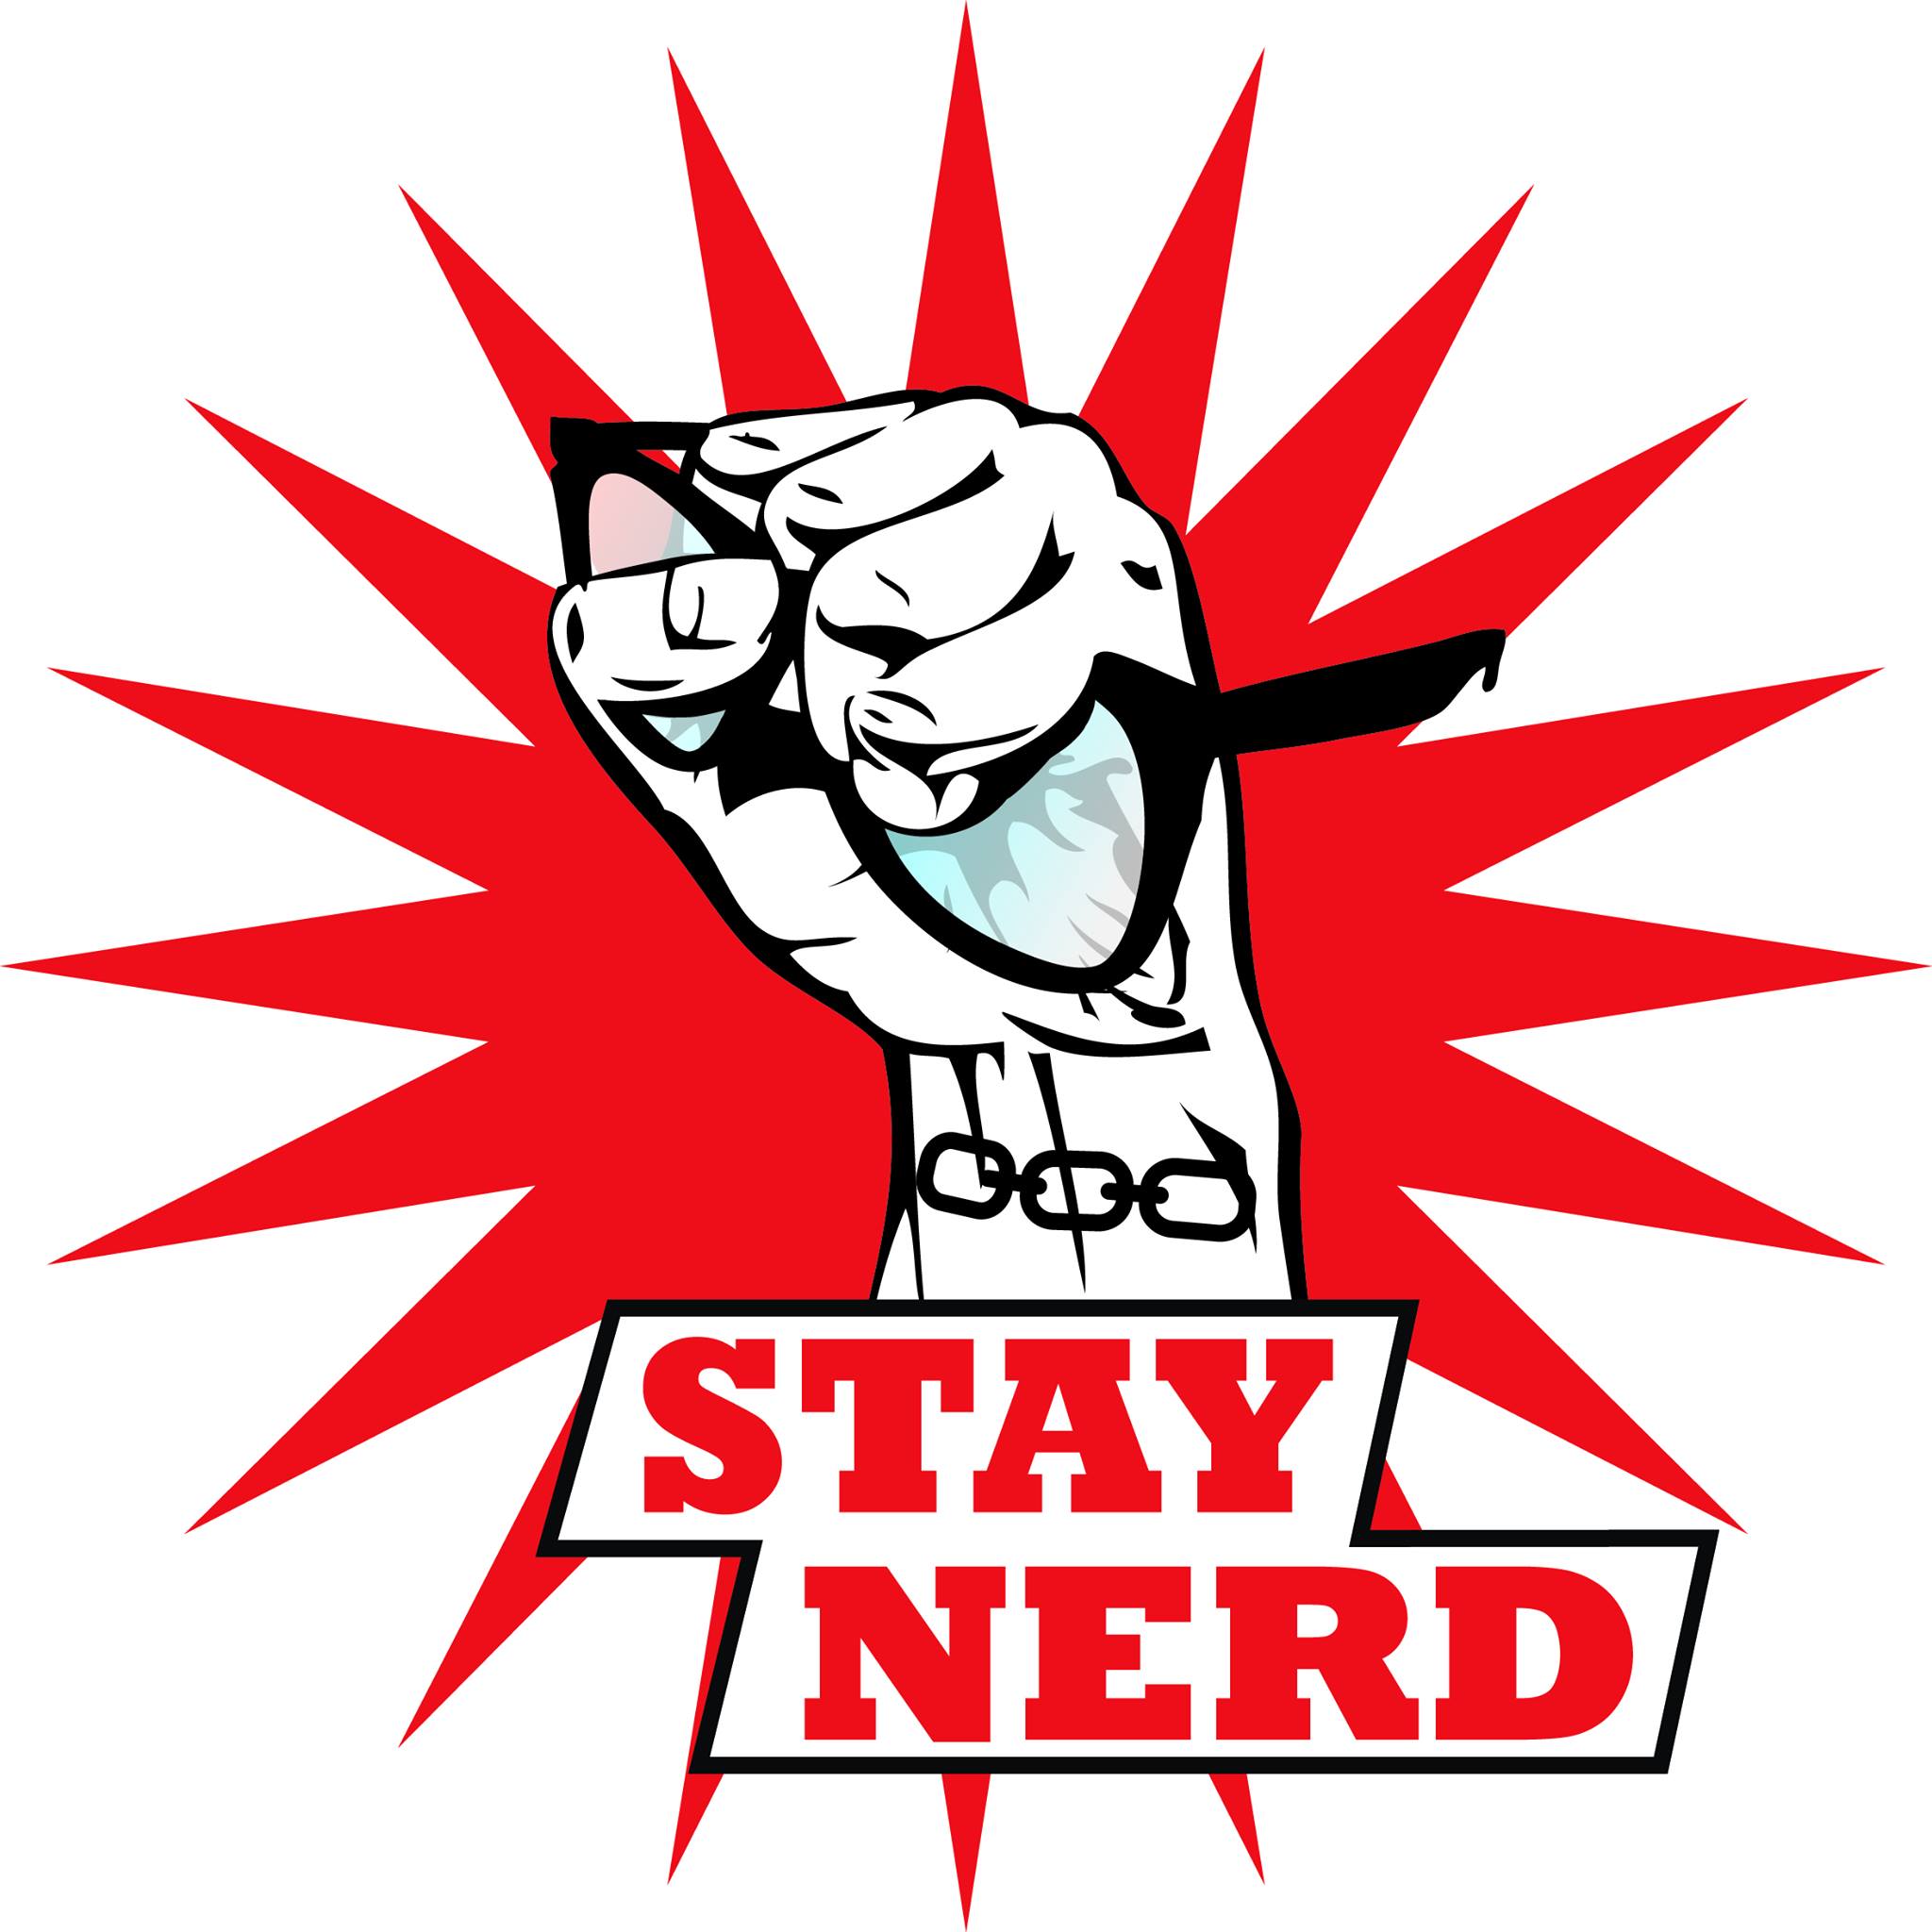 Stay Nerd -newdancealba.it - Gianluca De Bianchi - Jeanzilla